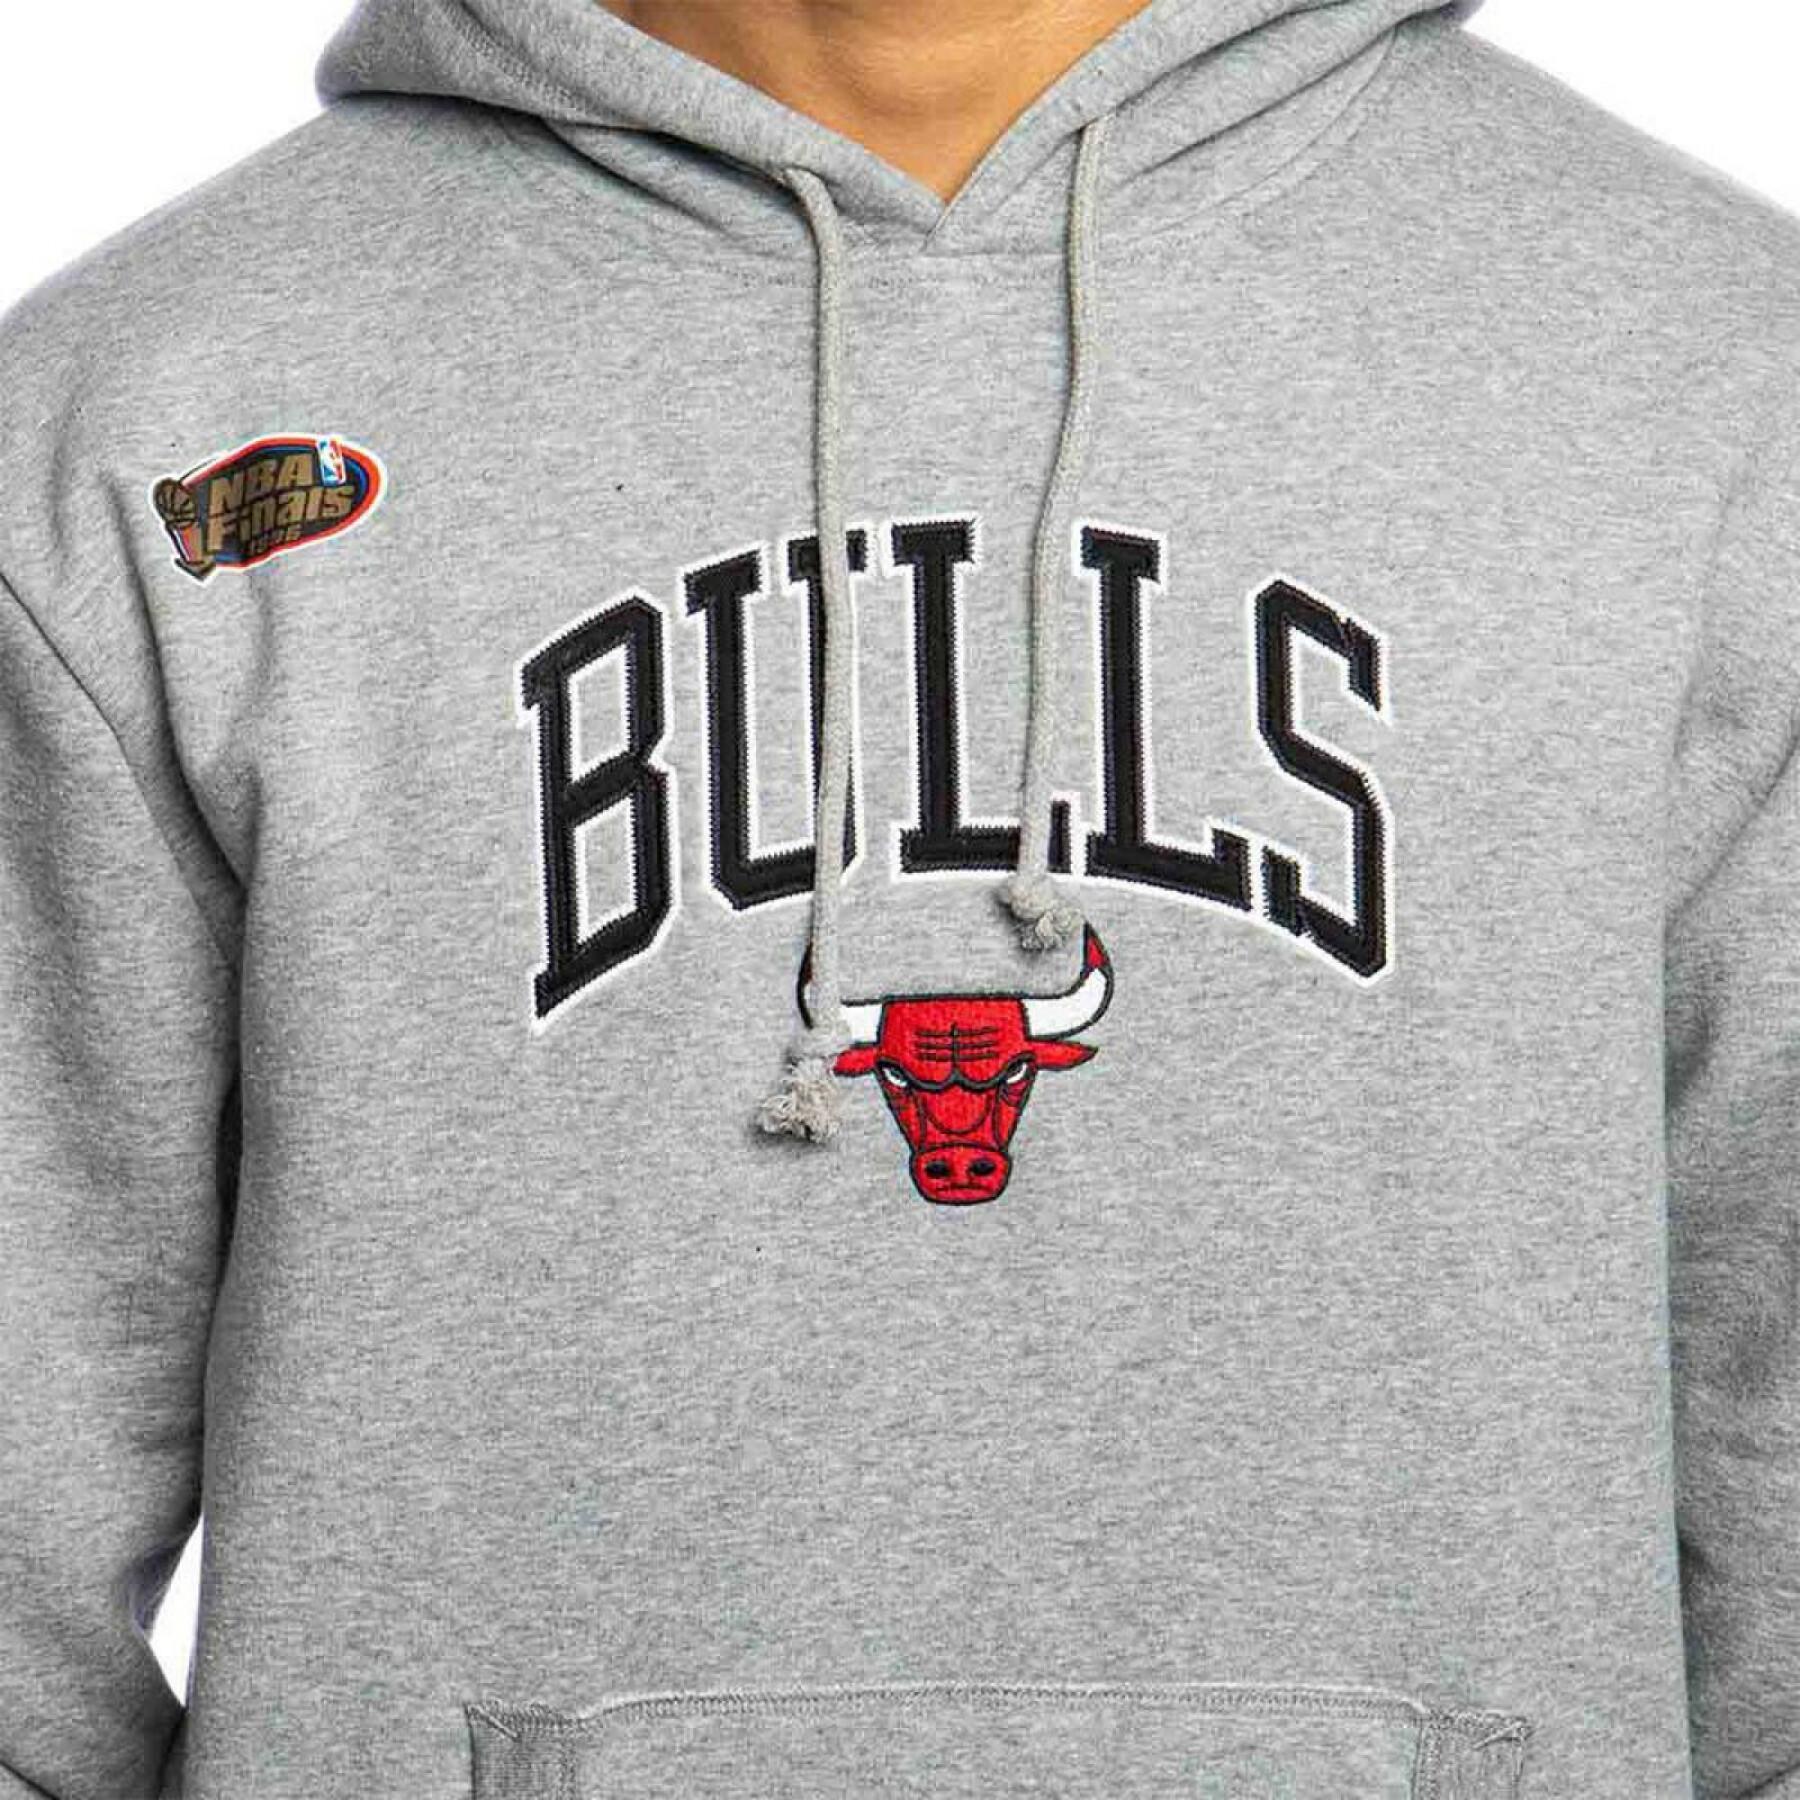 Boog hoodie Chicago Bulls 2021/22